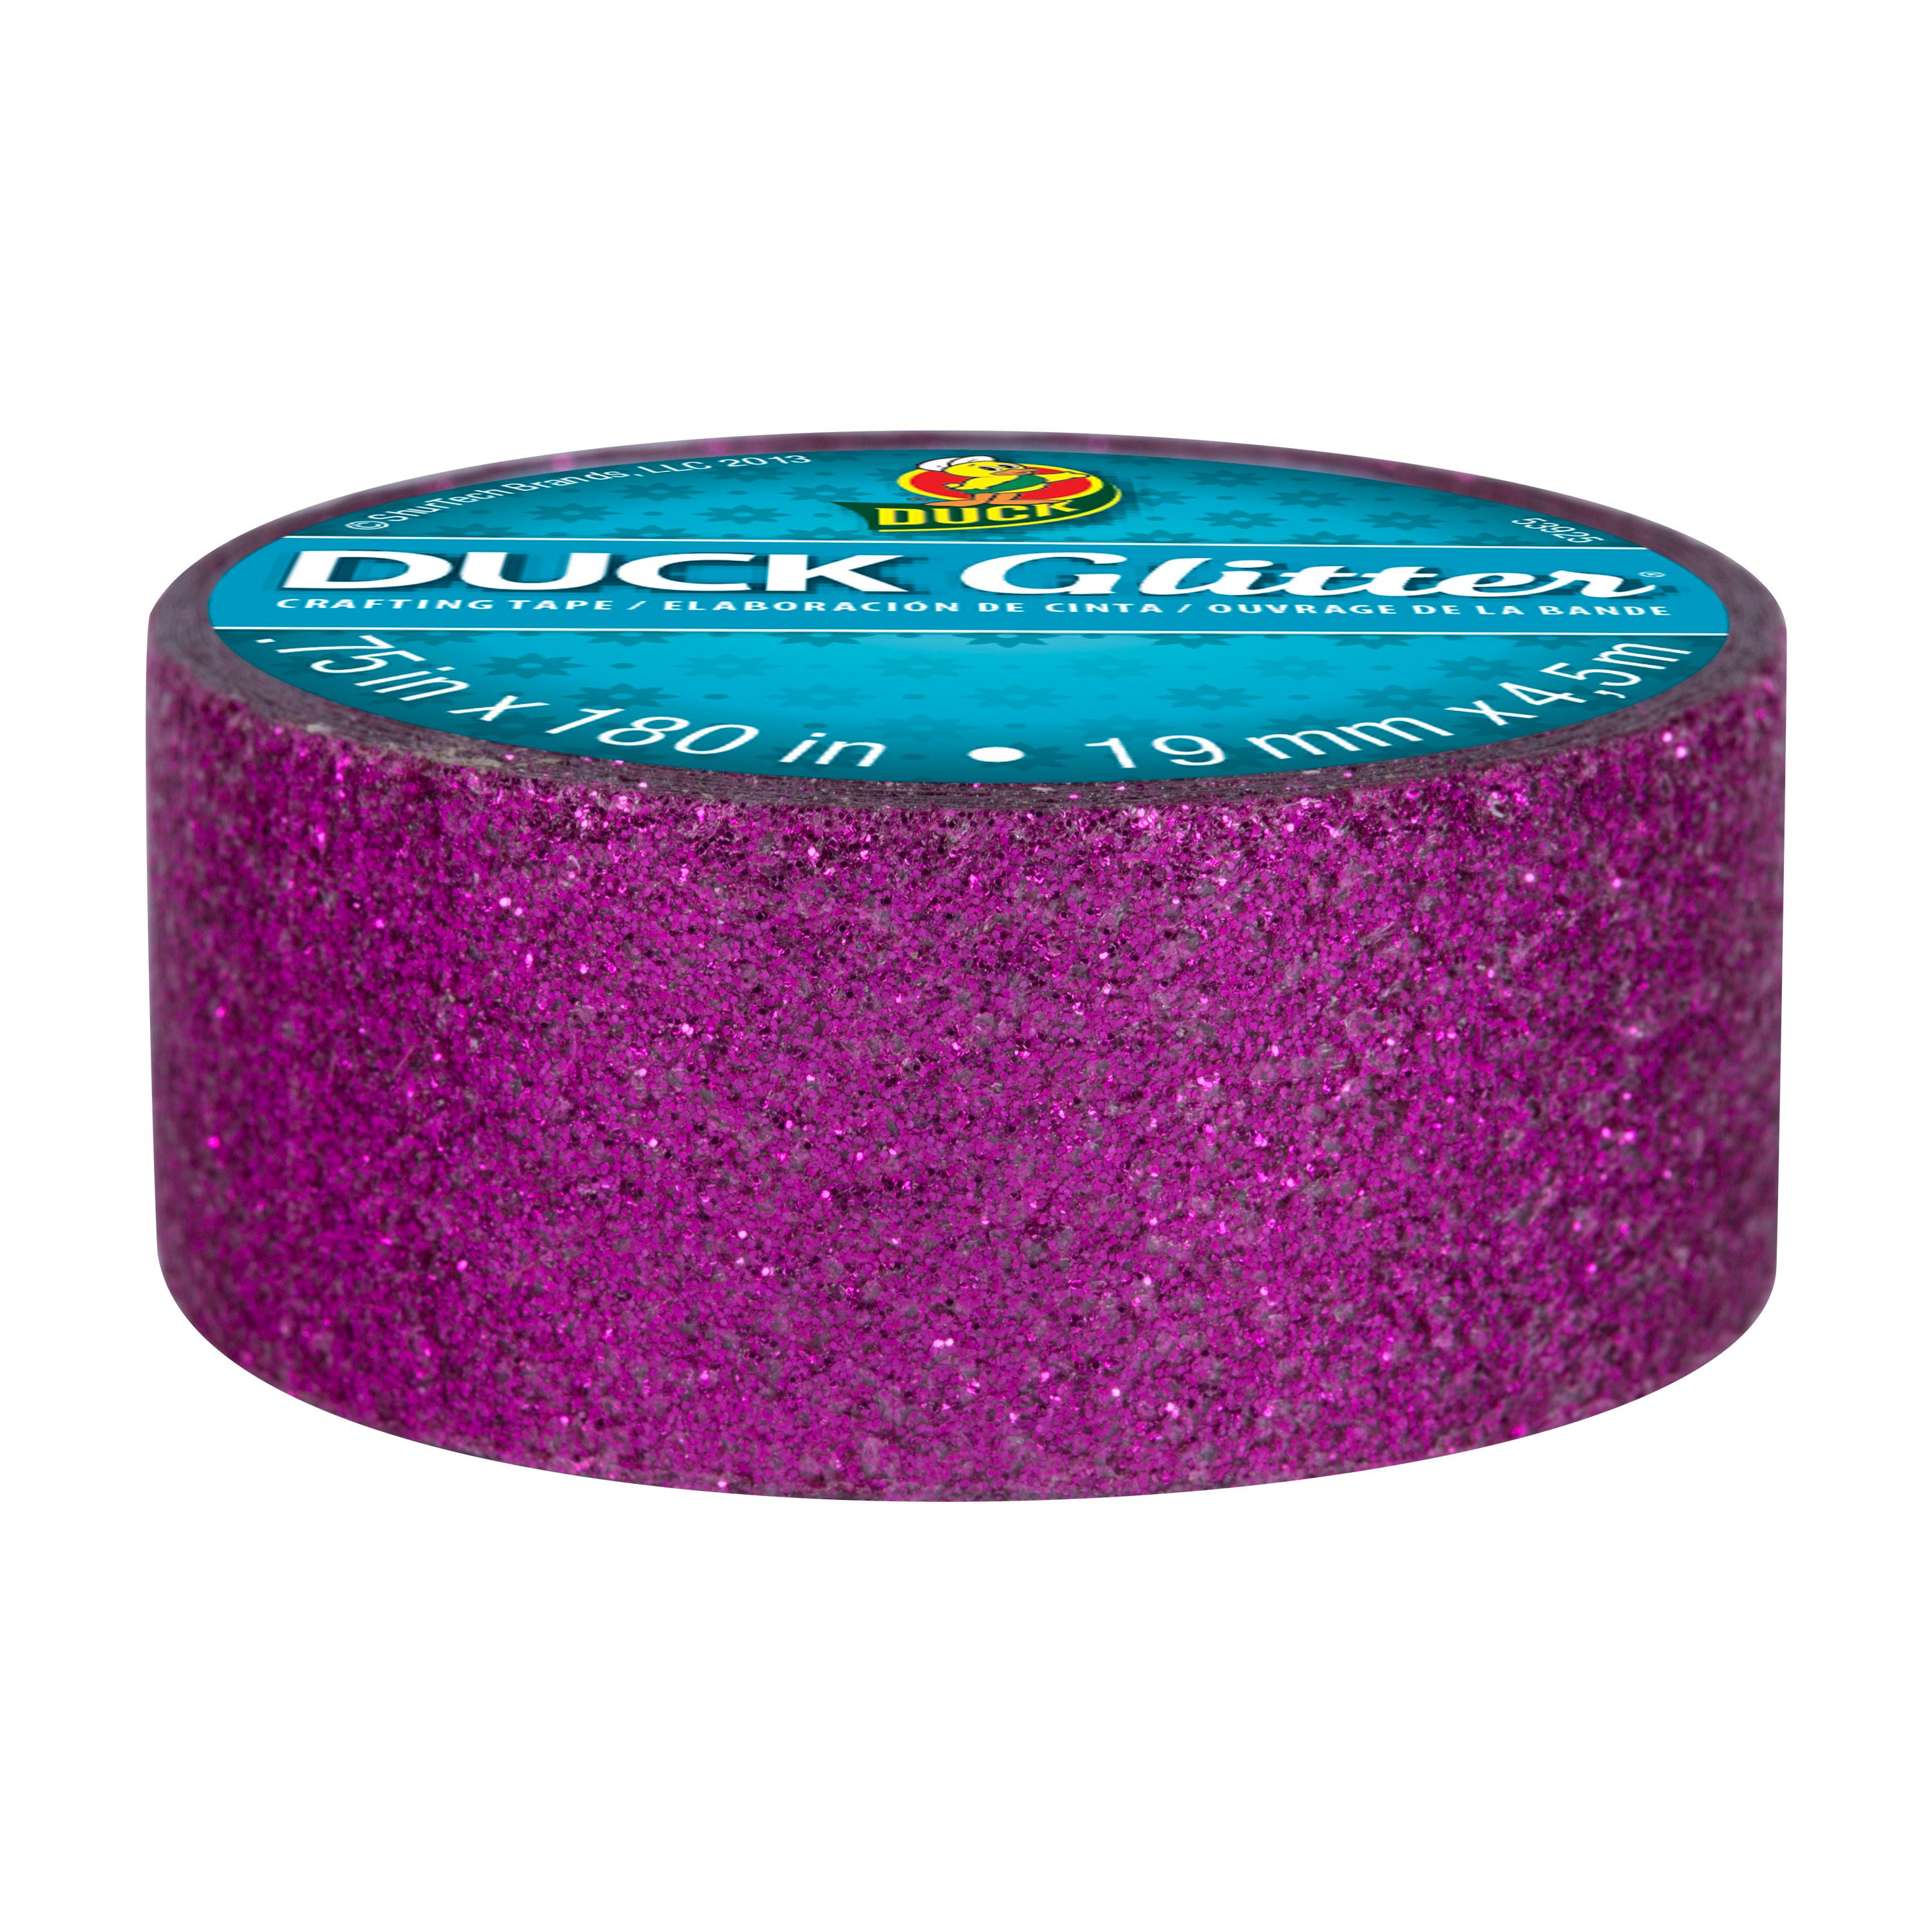 Duck Glitter Crafting Tape